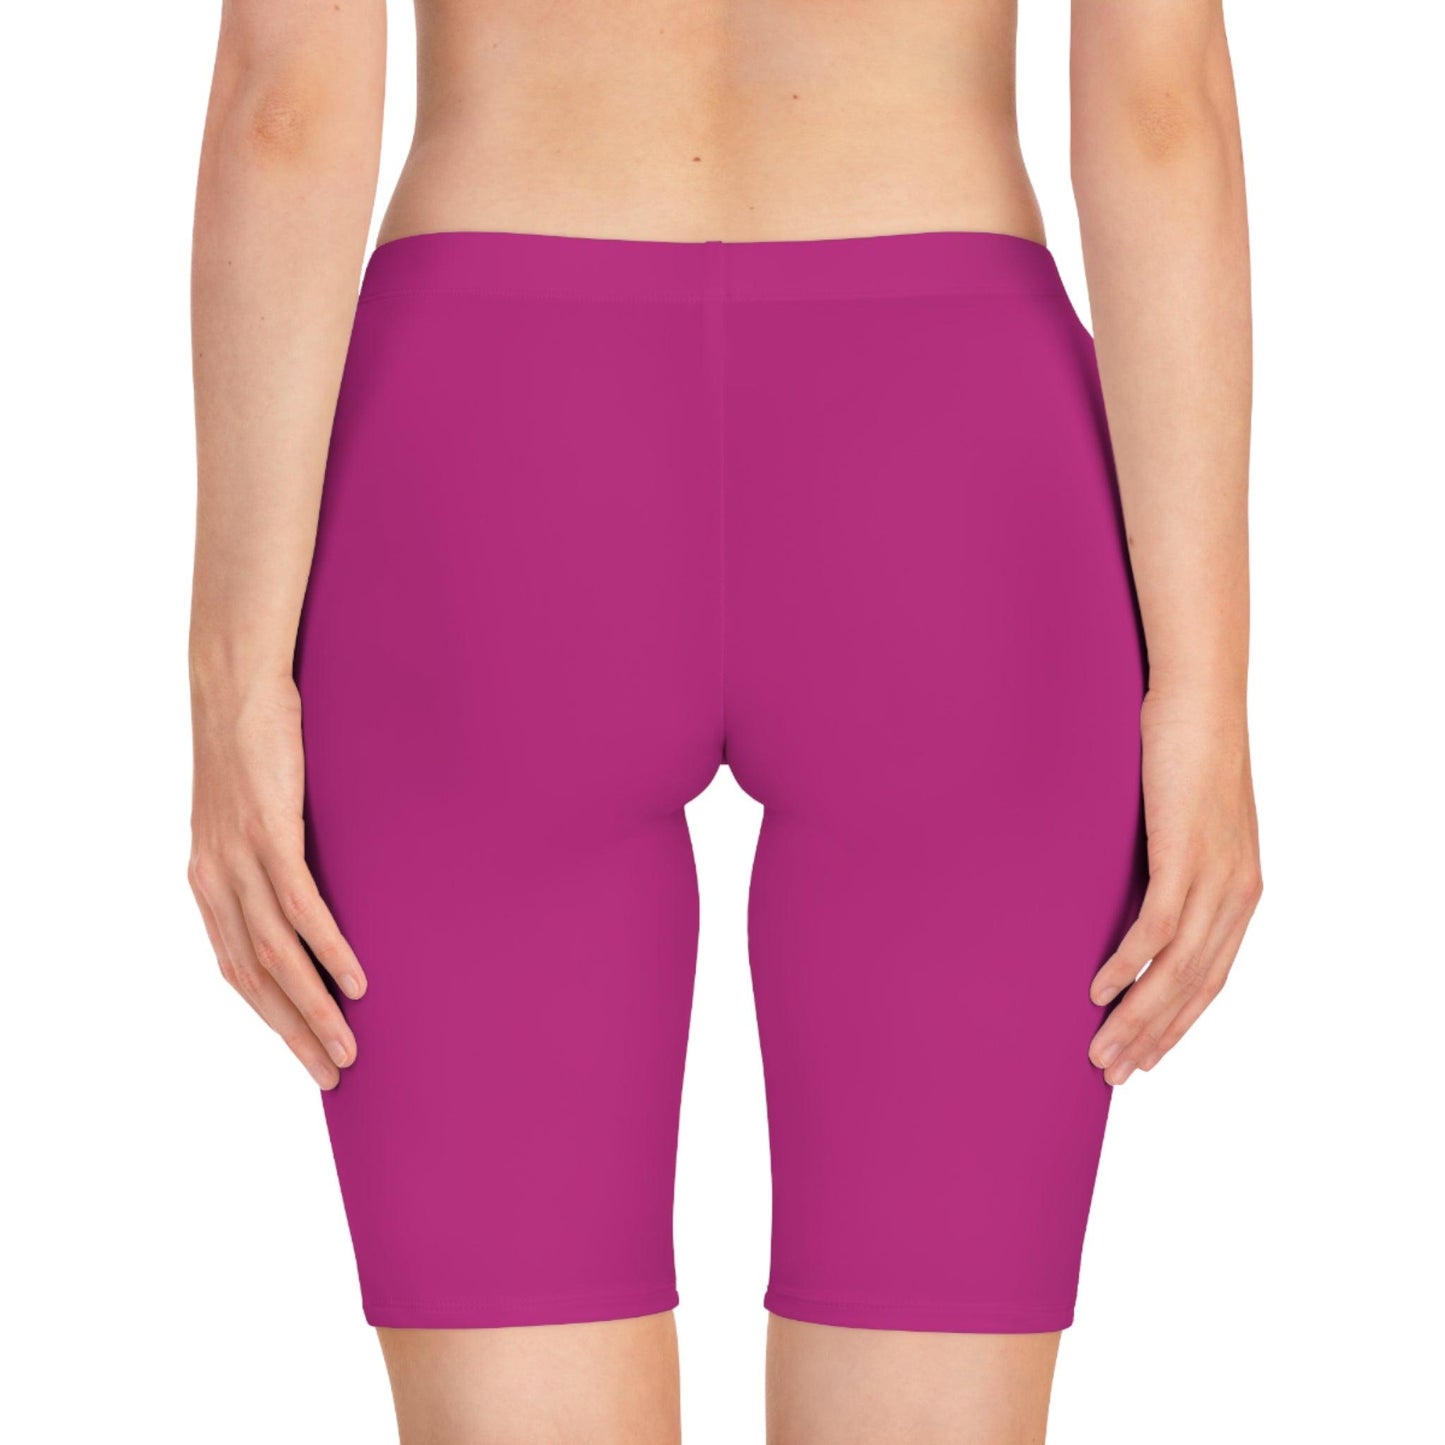 Women's Bike Pink Shorts - COFFEEBRE